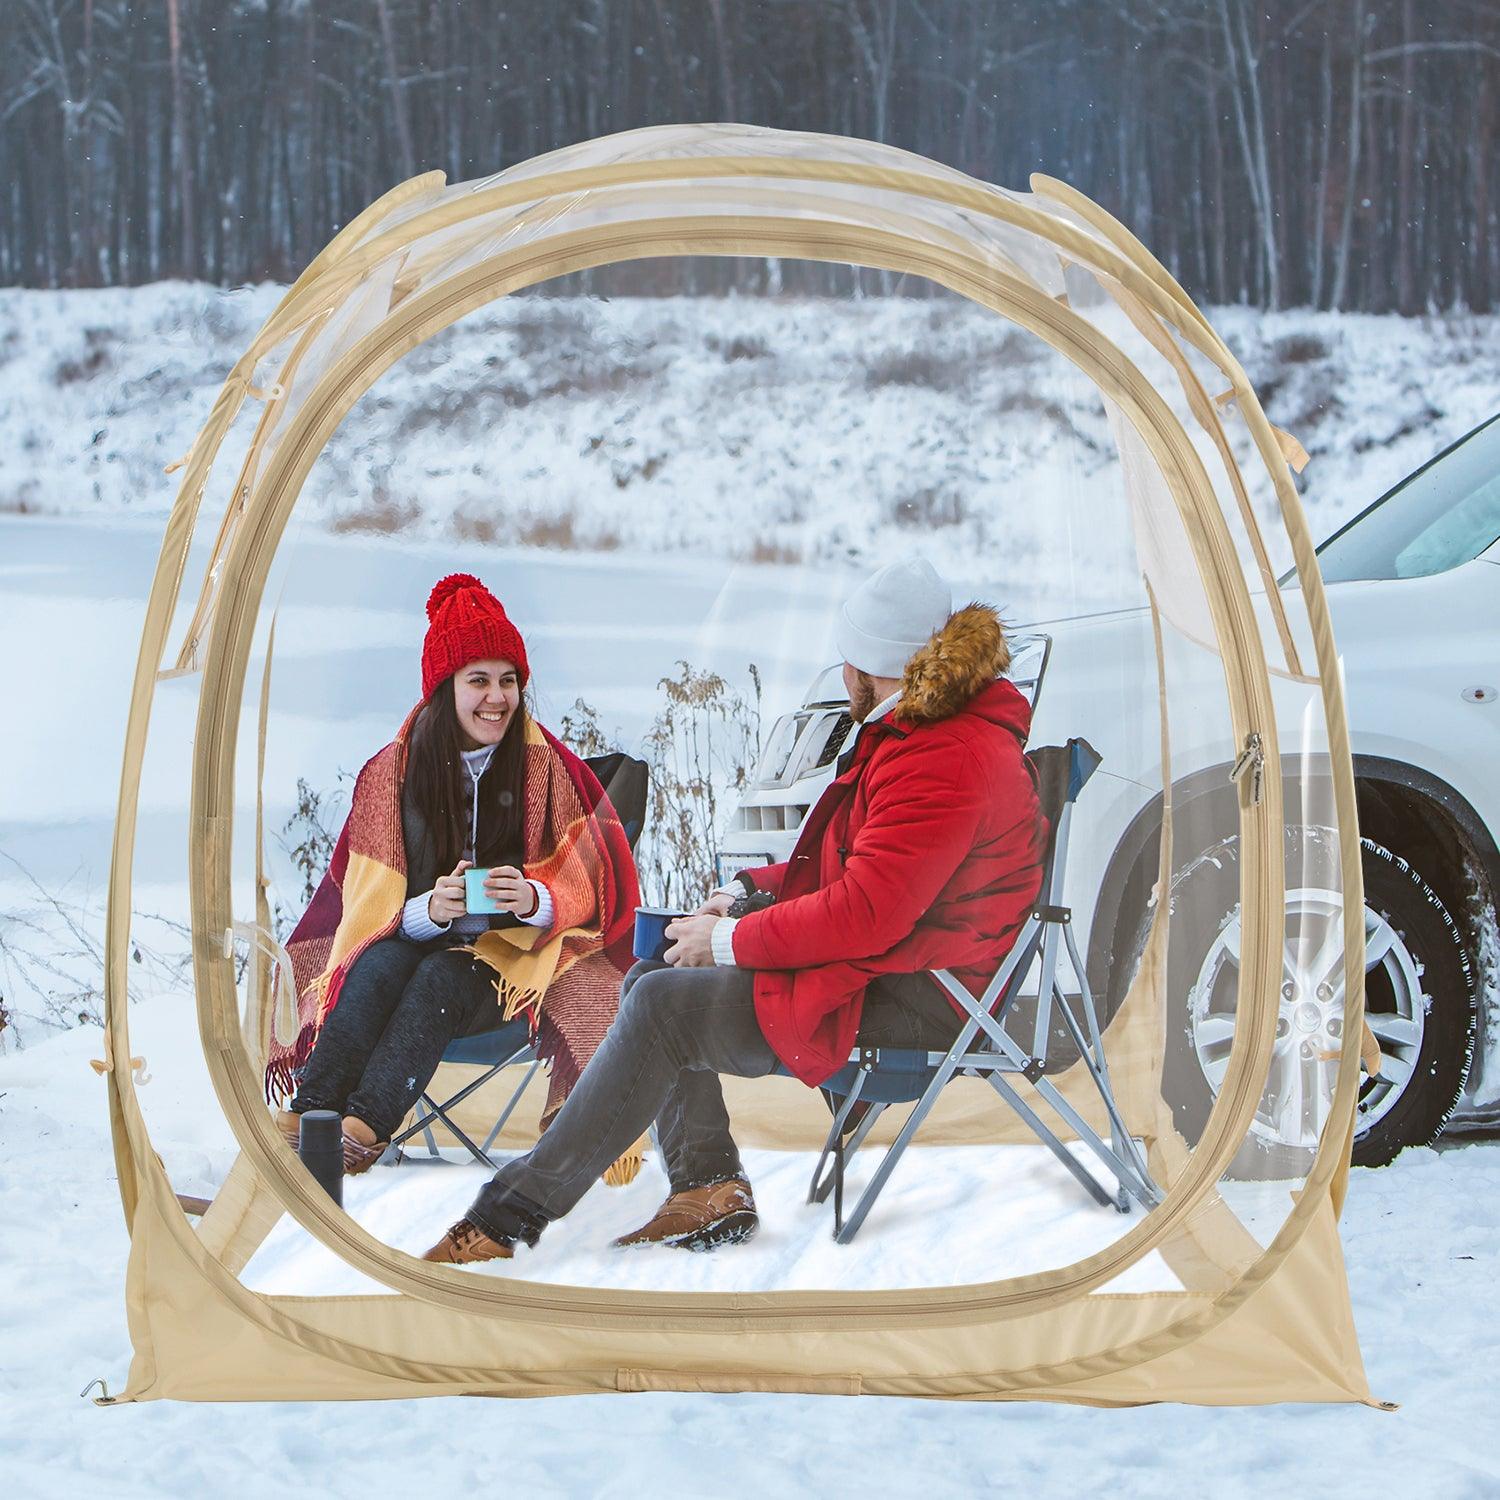 EighteenTek Instant Weather Pod keep warm for winter camping